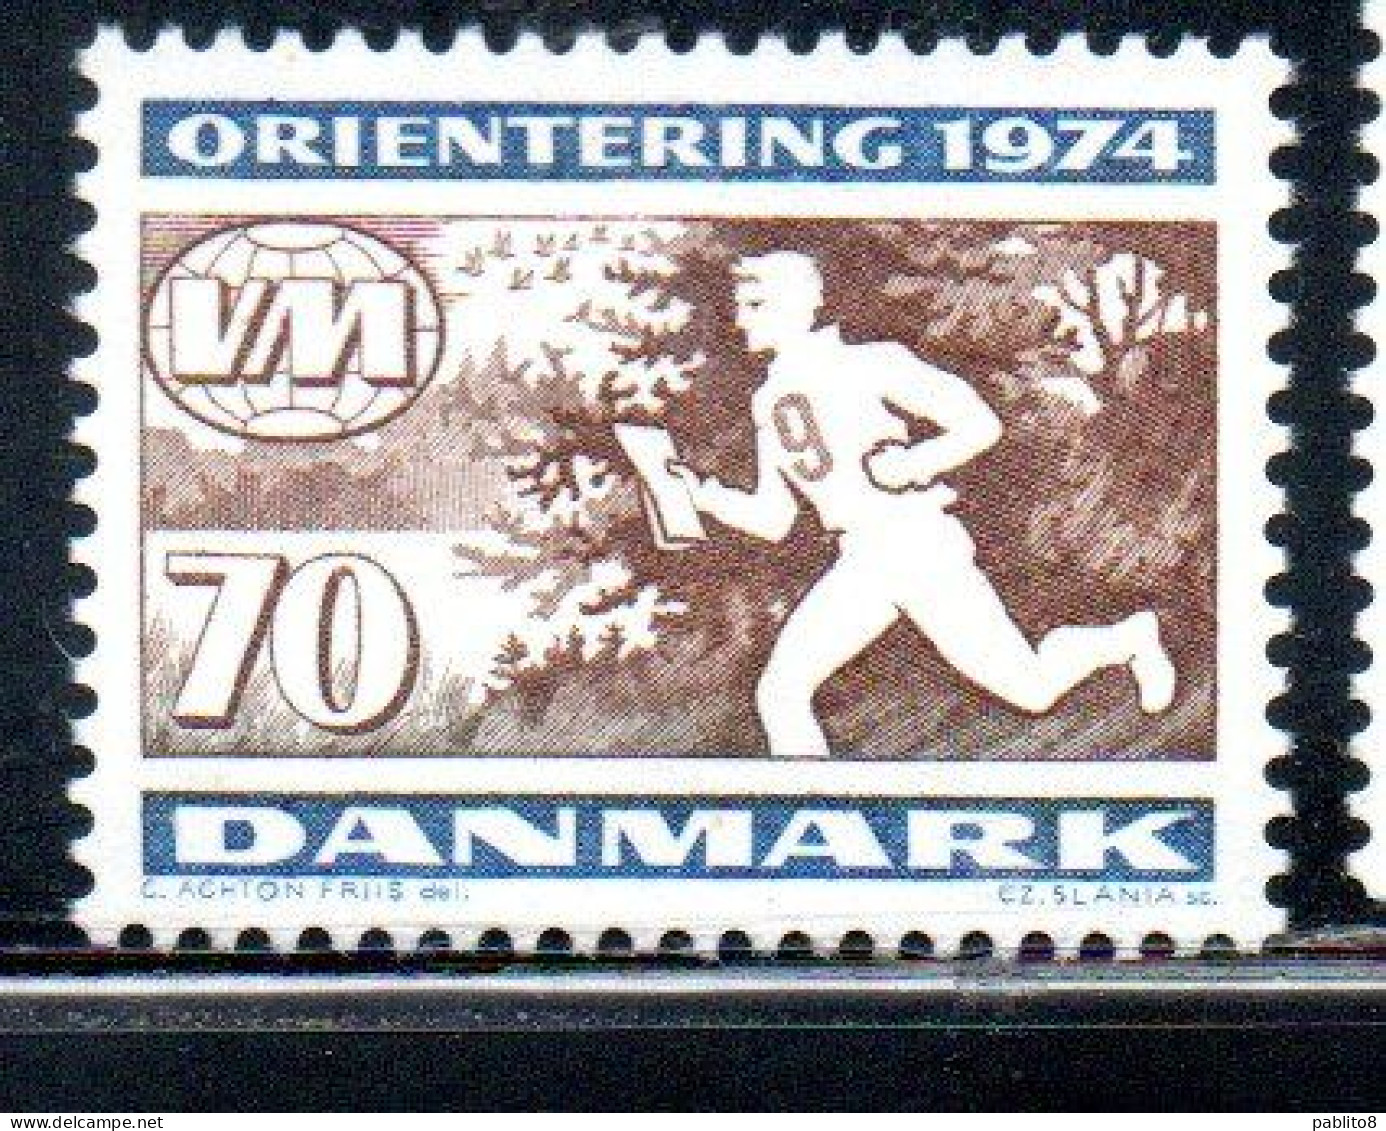 DANEMARK DANMARK DENMARK DANIMARCA 1974 WORLD ORIENTEERING CHAMPIONSHIPS RUNNER 70o MNH - Nuovi